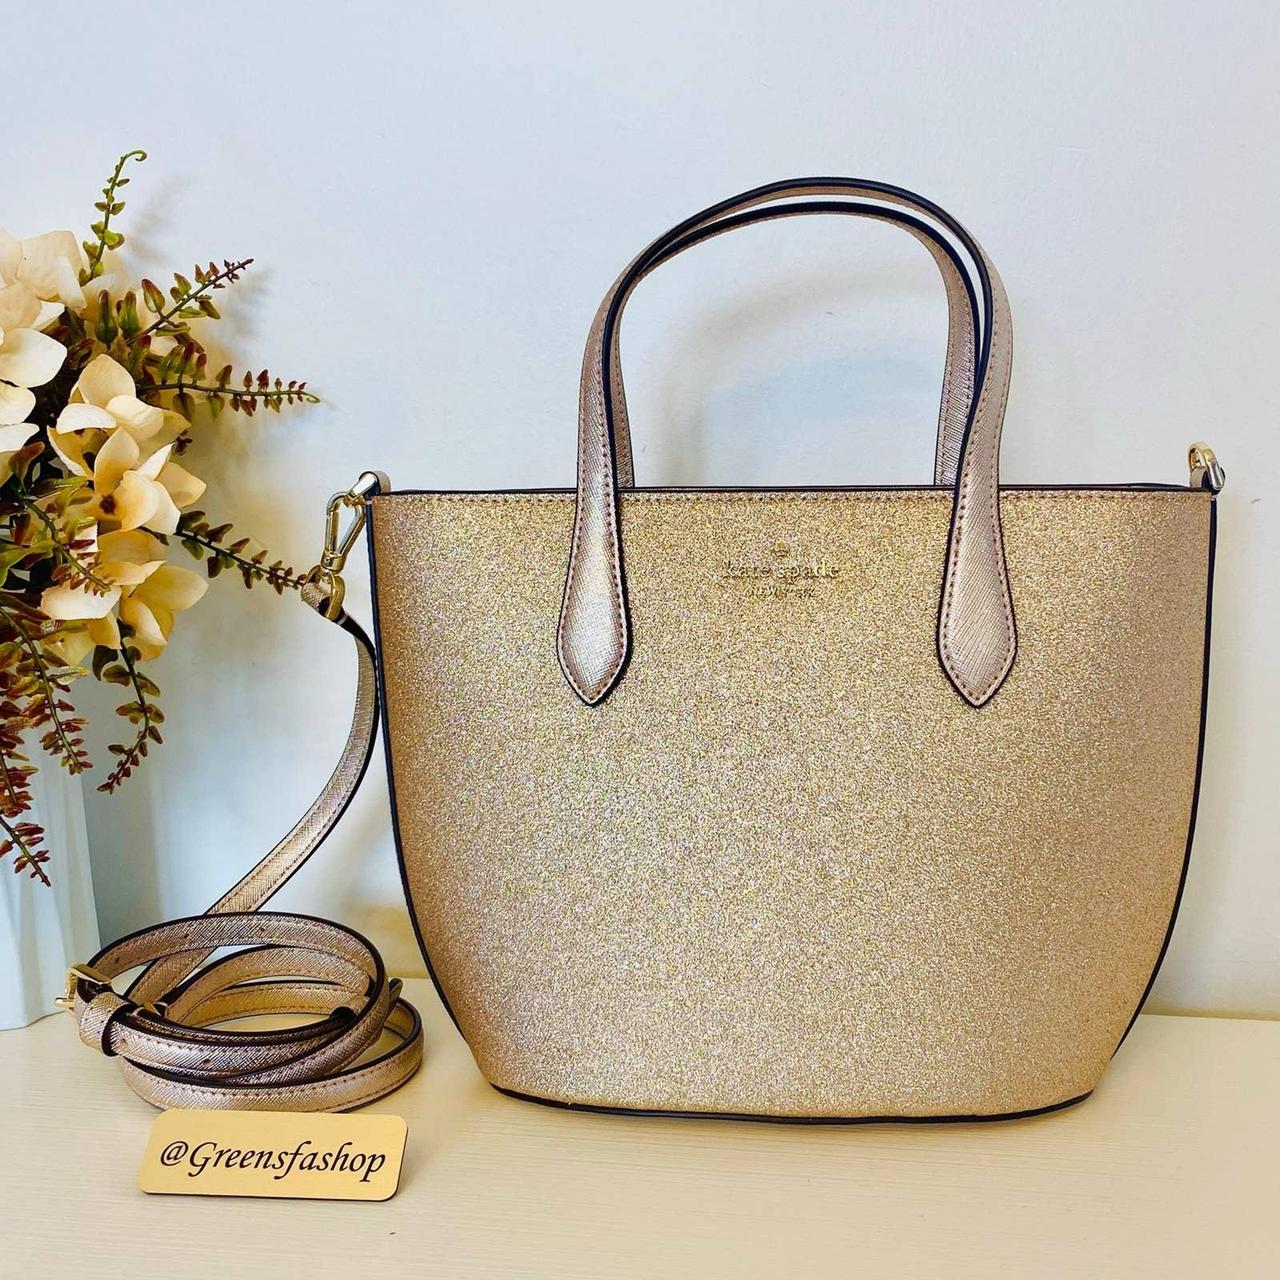 Kate spade gold crossbody purse - Women's handbags